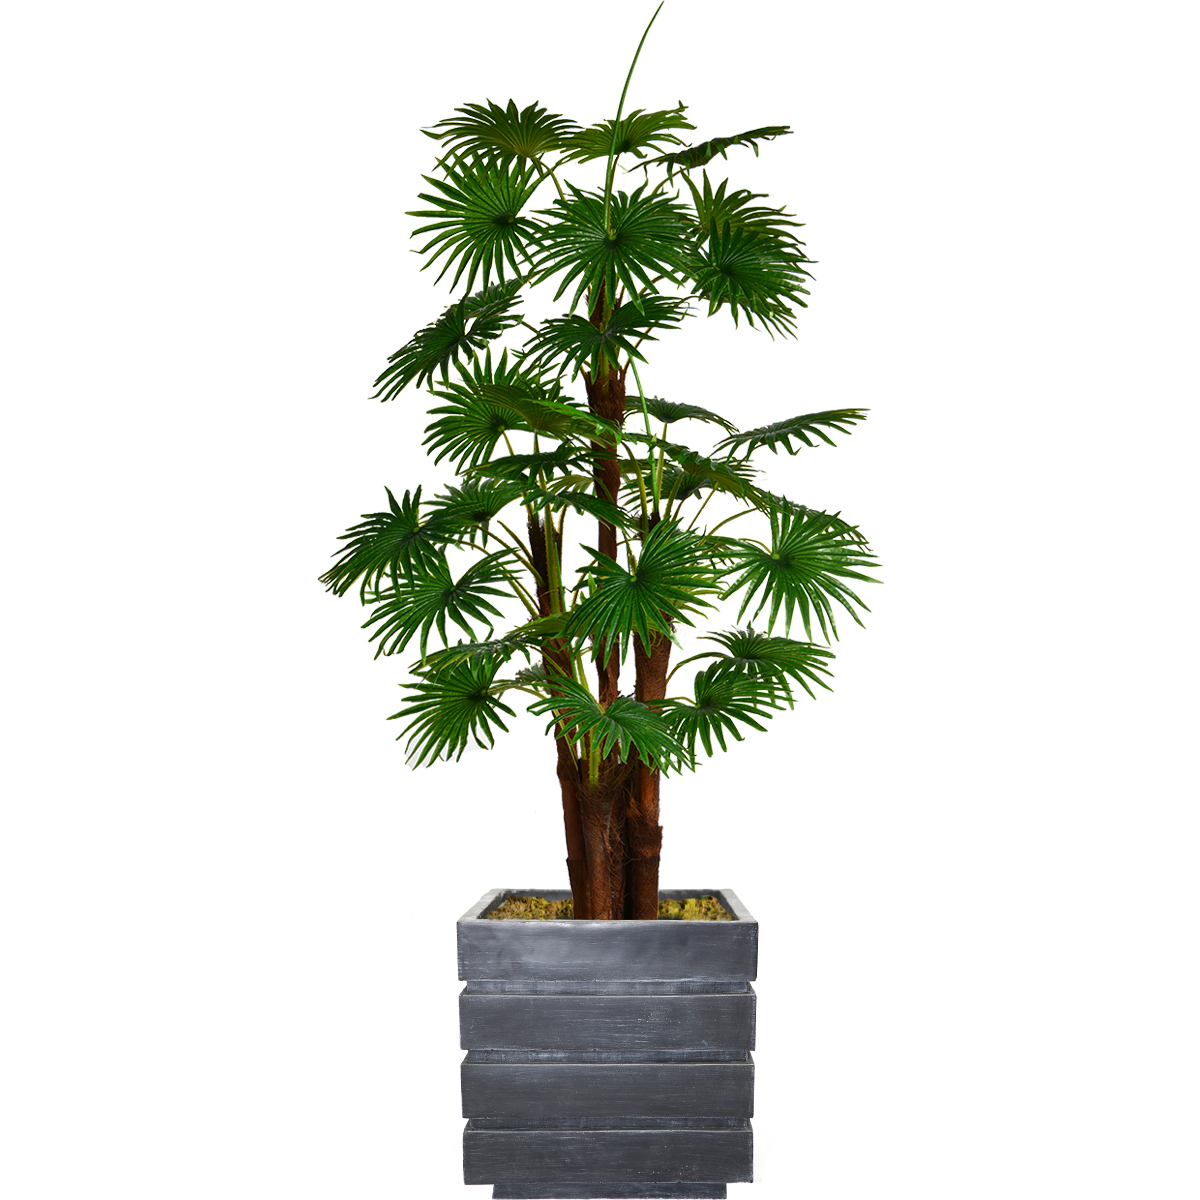 Vhx129204 72 In. Tall Fan Palm Tree, Burlap Kit & Fiberstone Planter